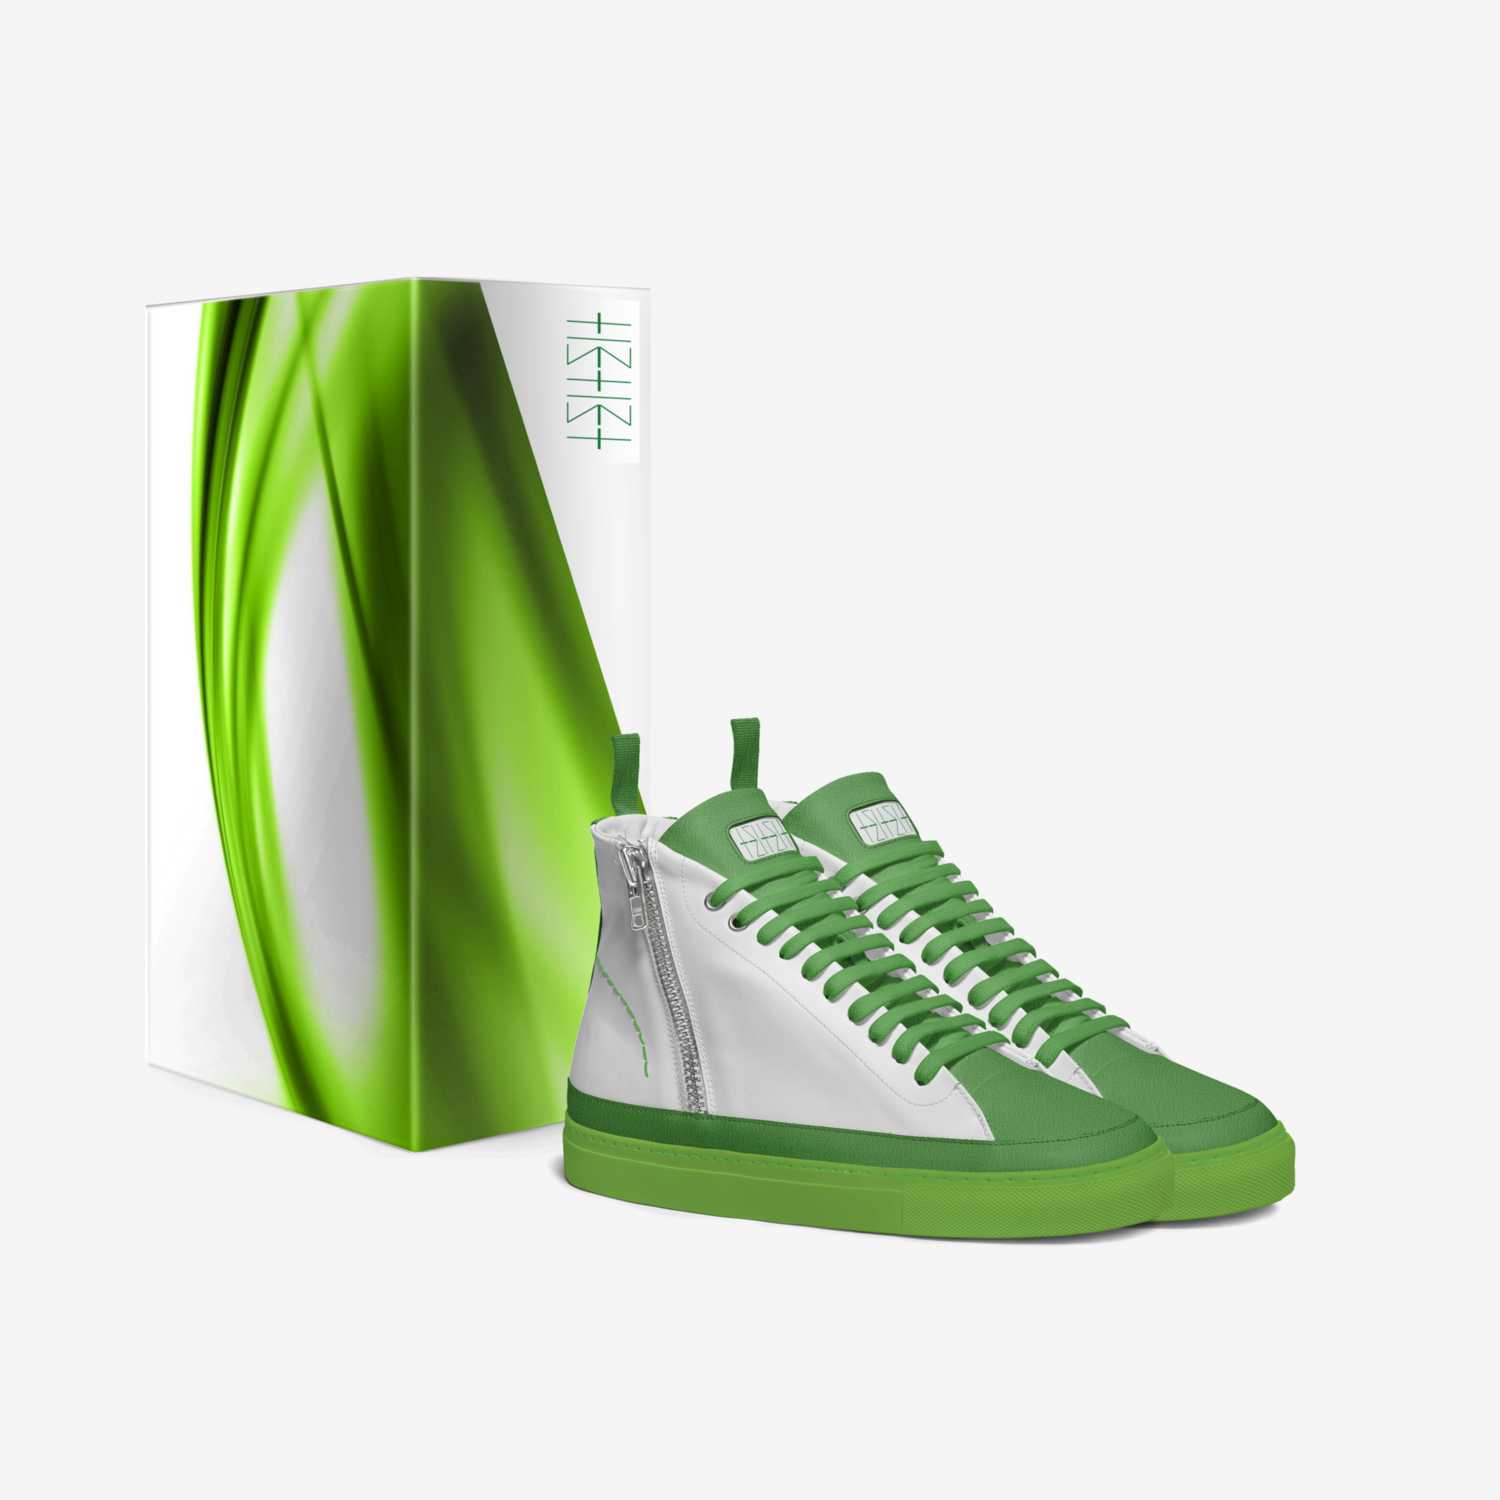 TT No.0  custom made in Italy shoes by Ricardo Yoreh Ladino | Box view